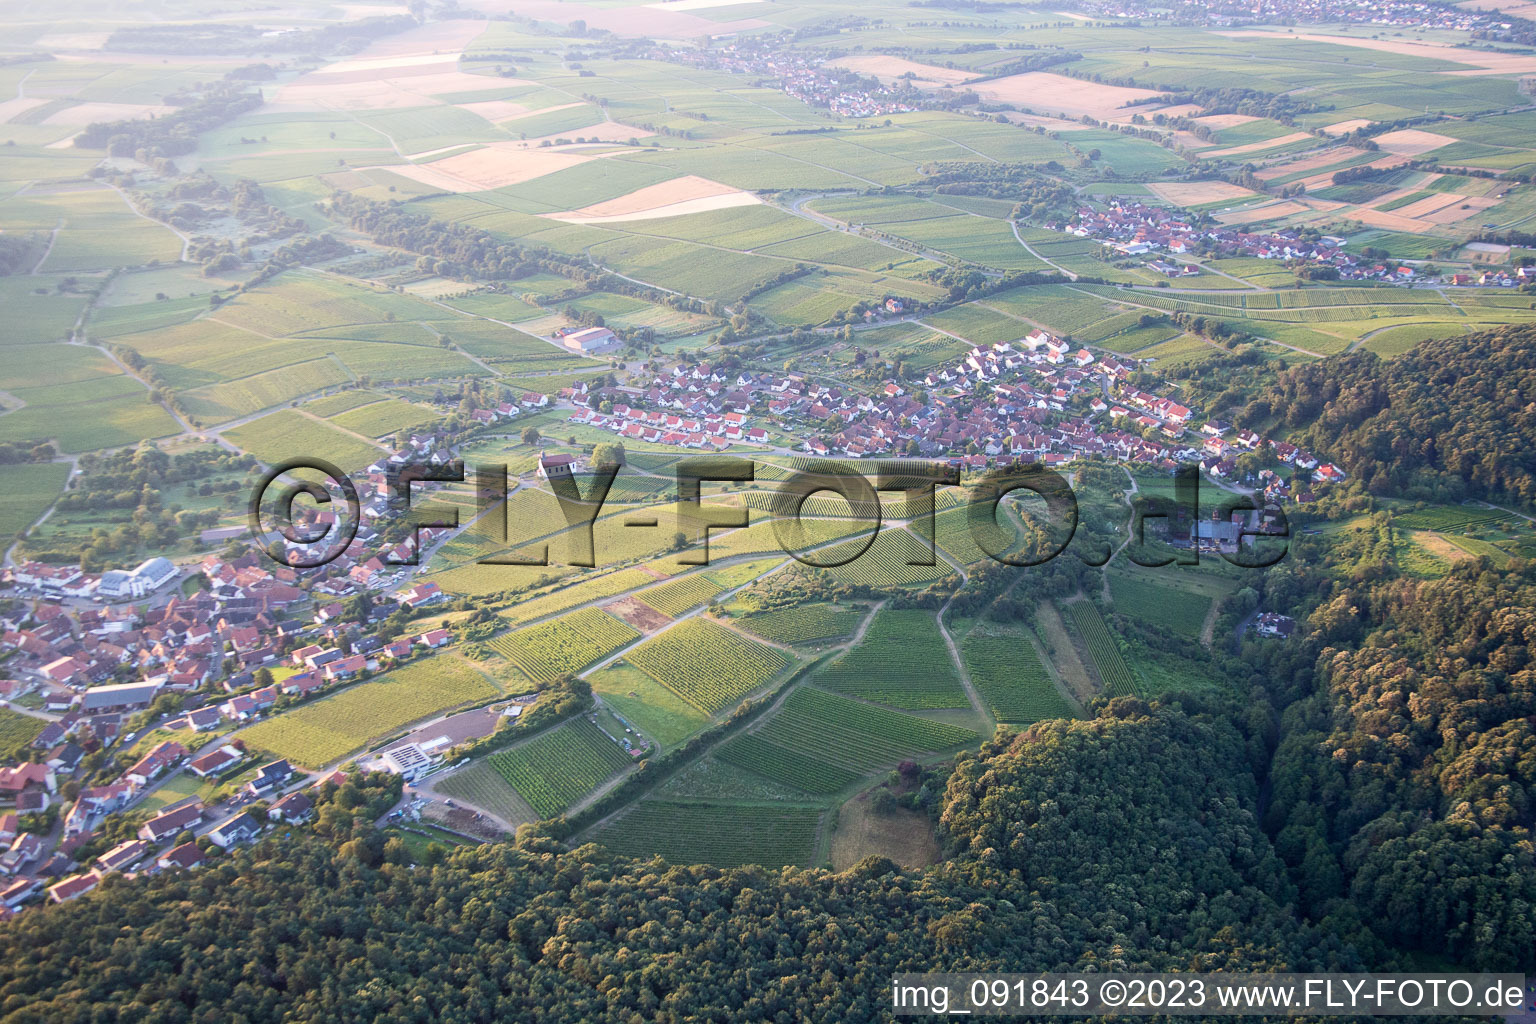 District Gleiszellen in Gleiszellen-Gleishorbach in the state Rhineland-Palatinate, Germany from the plane